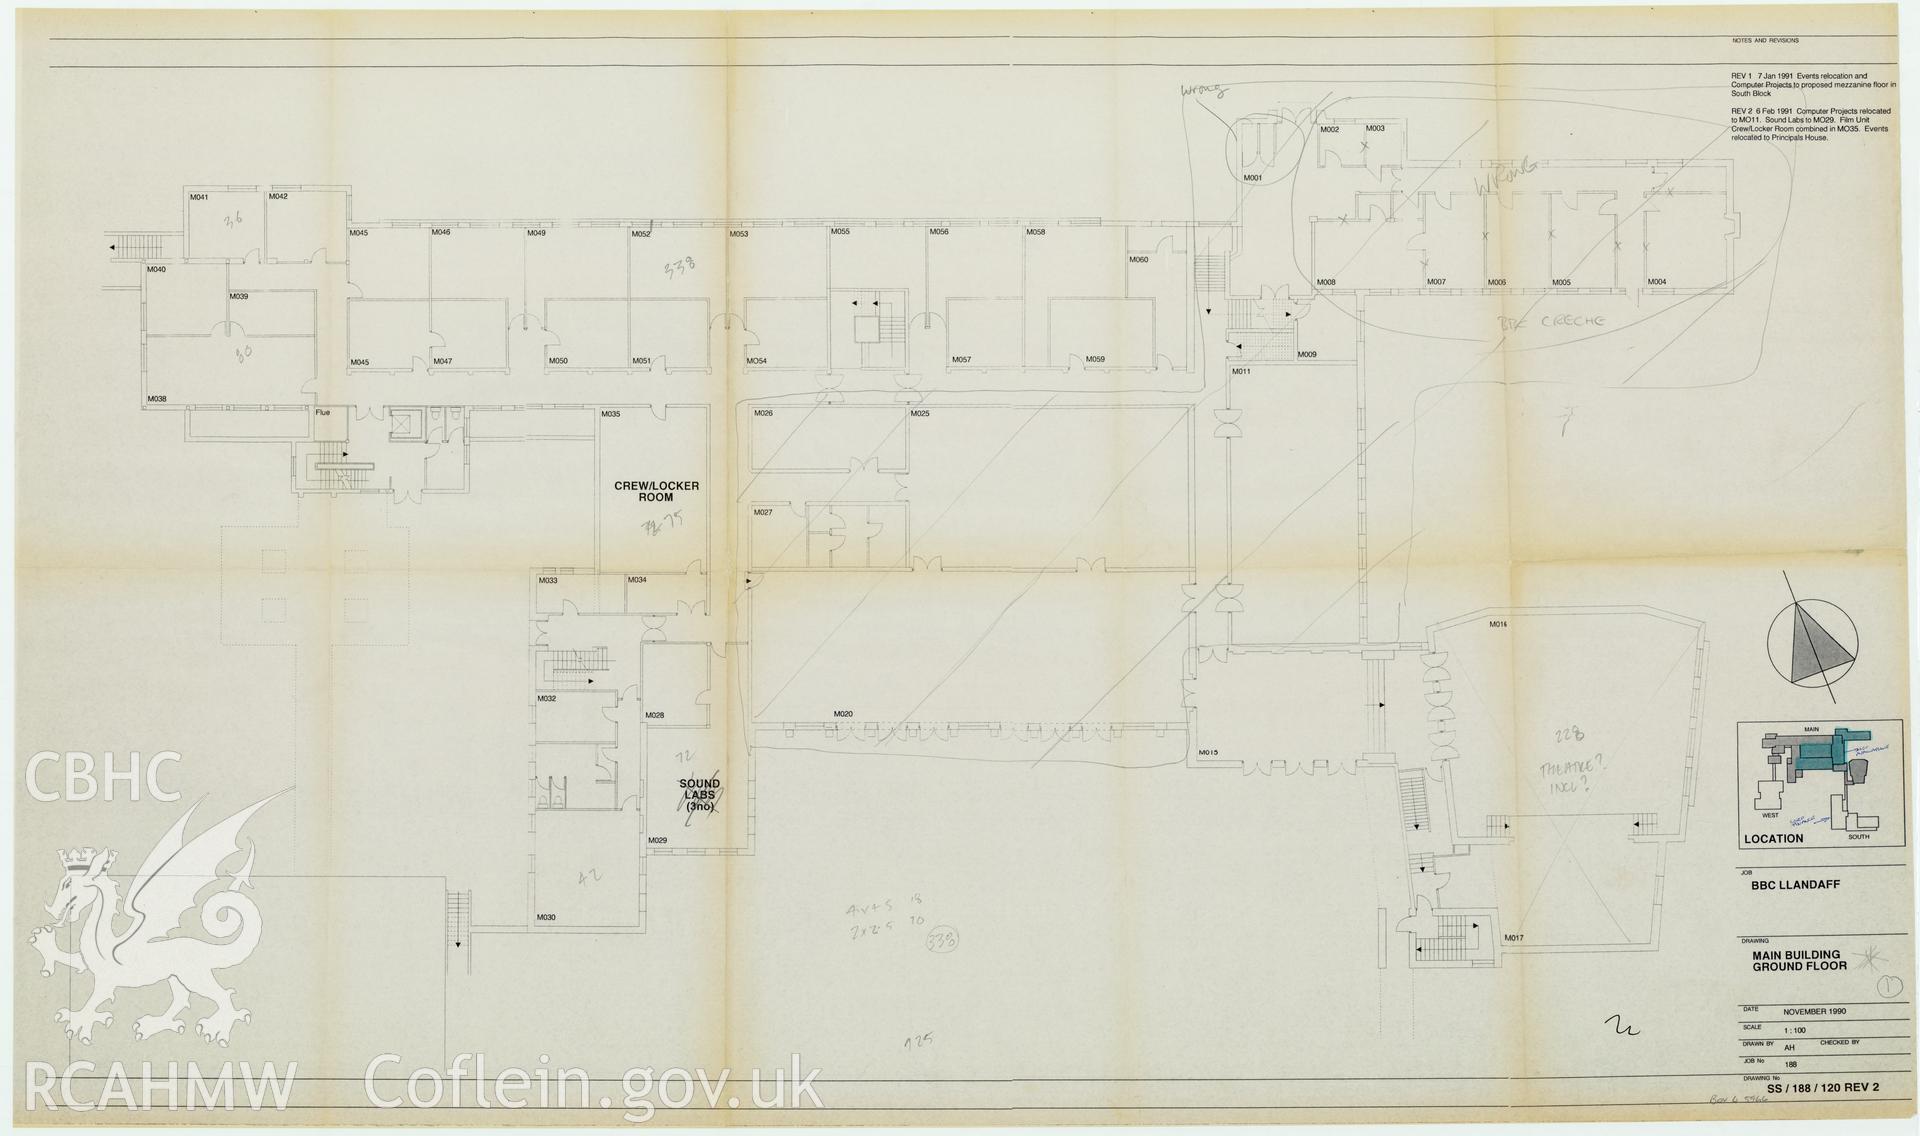 Digitised drawing plan of BBC Llandaff  - drawing of the main building, ground floor plan. Drawing no. SS/188/120. November 1990.